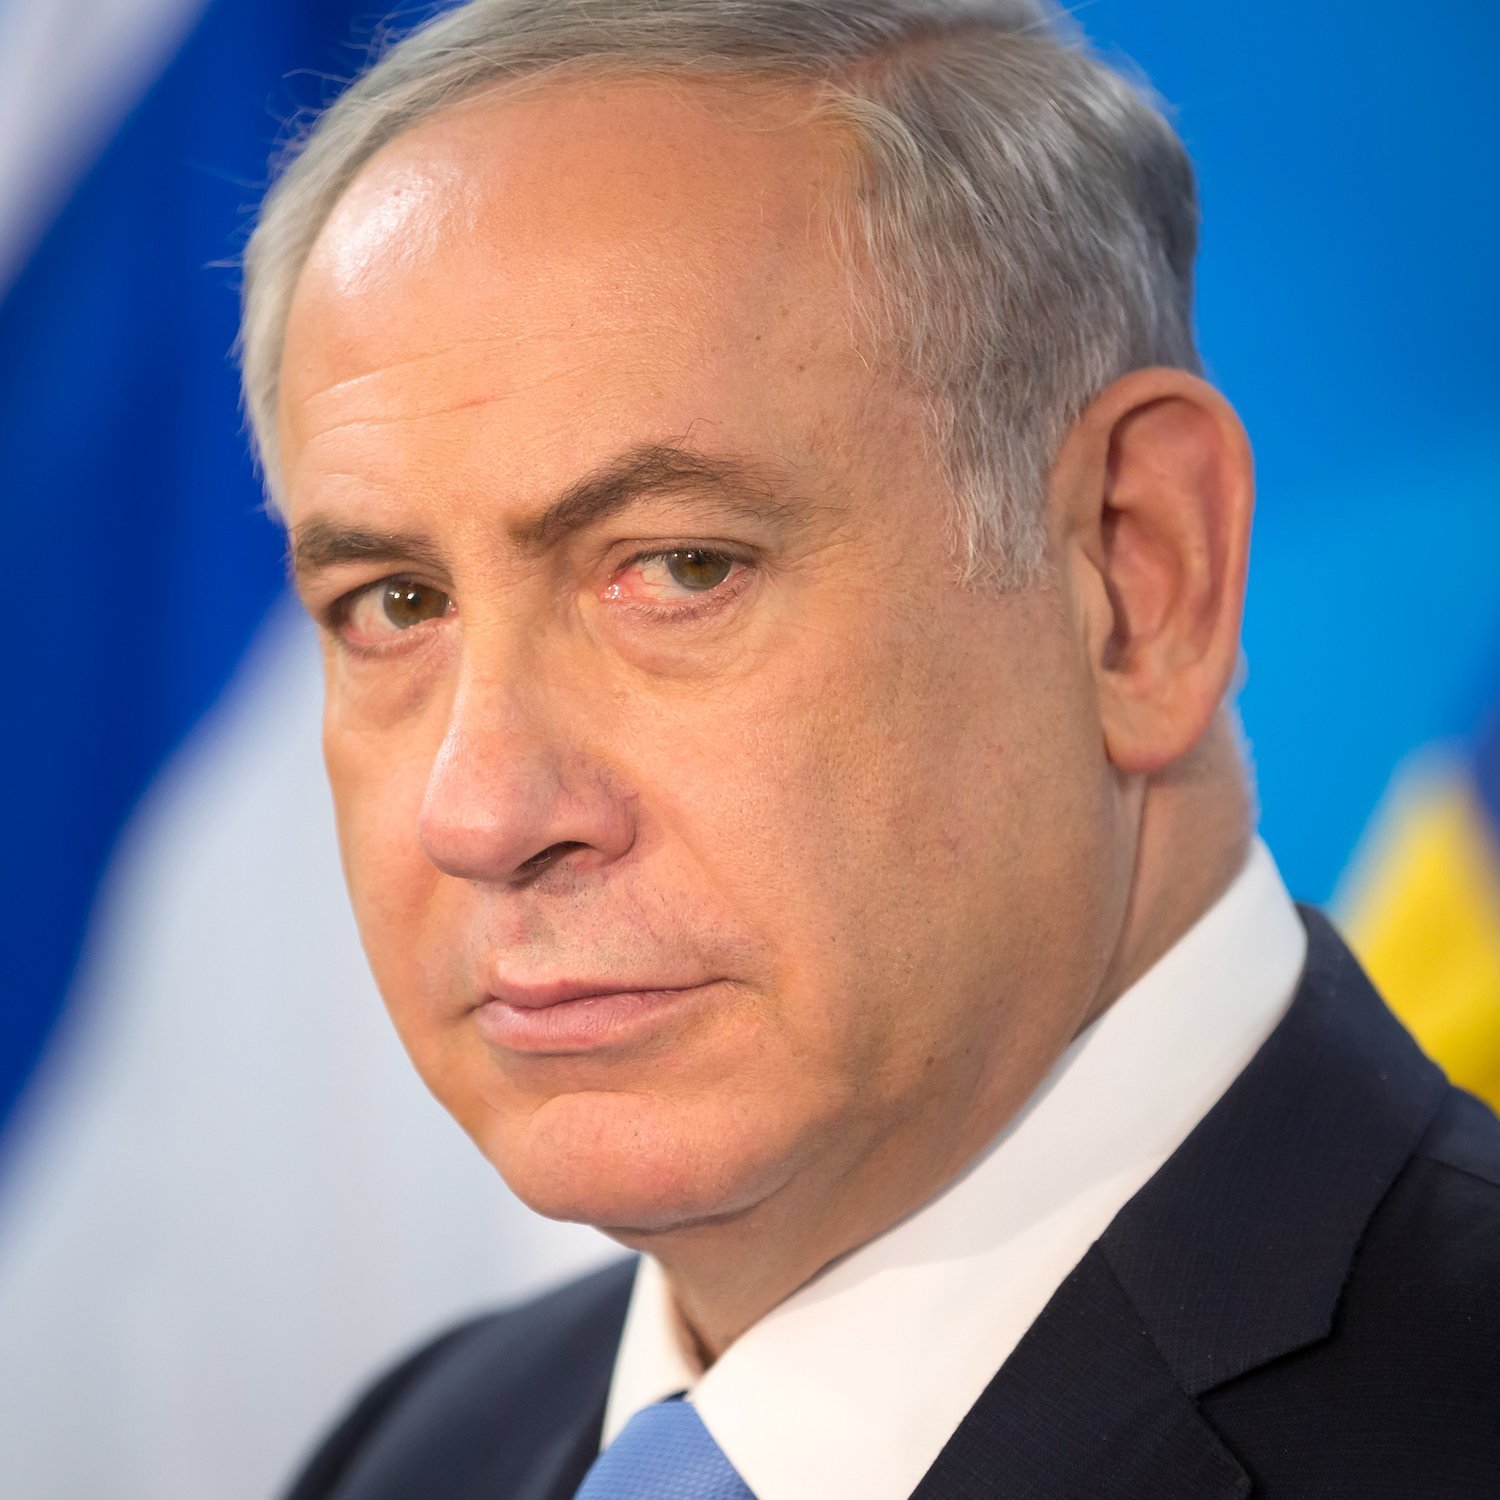 Listen:  The Ousting of Israel's Benjamin Netanyahu